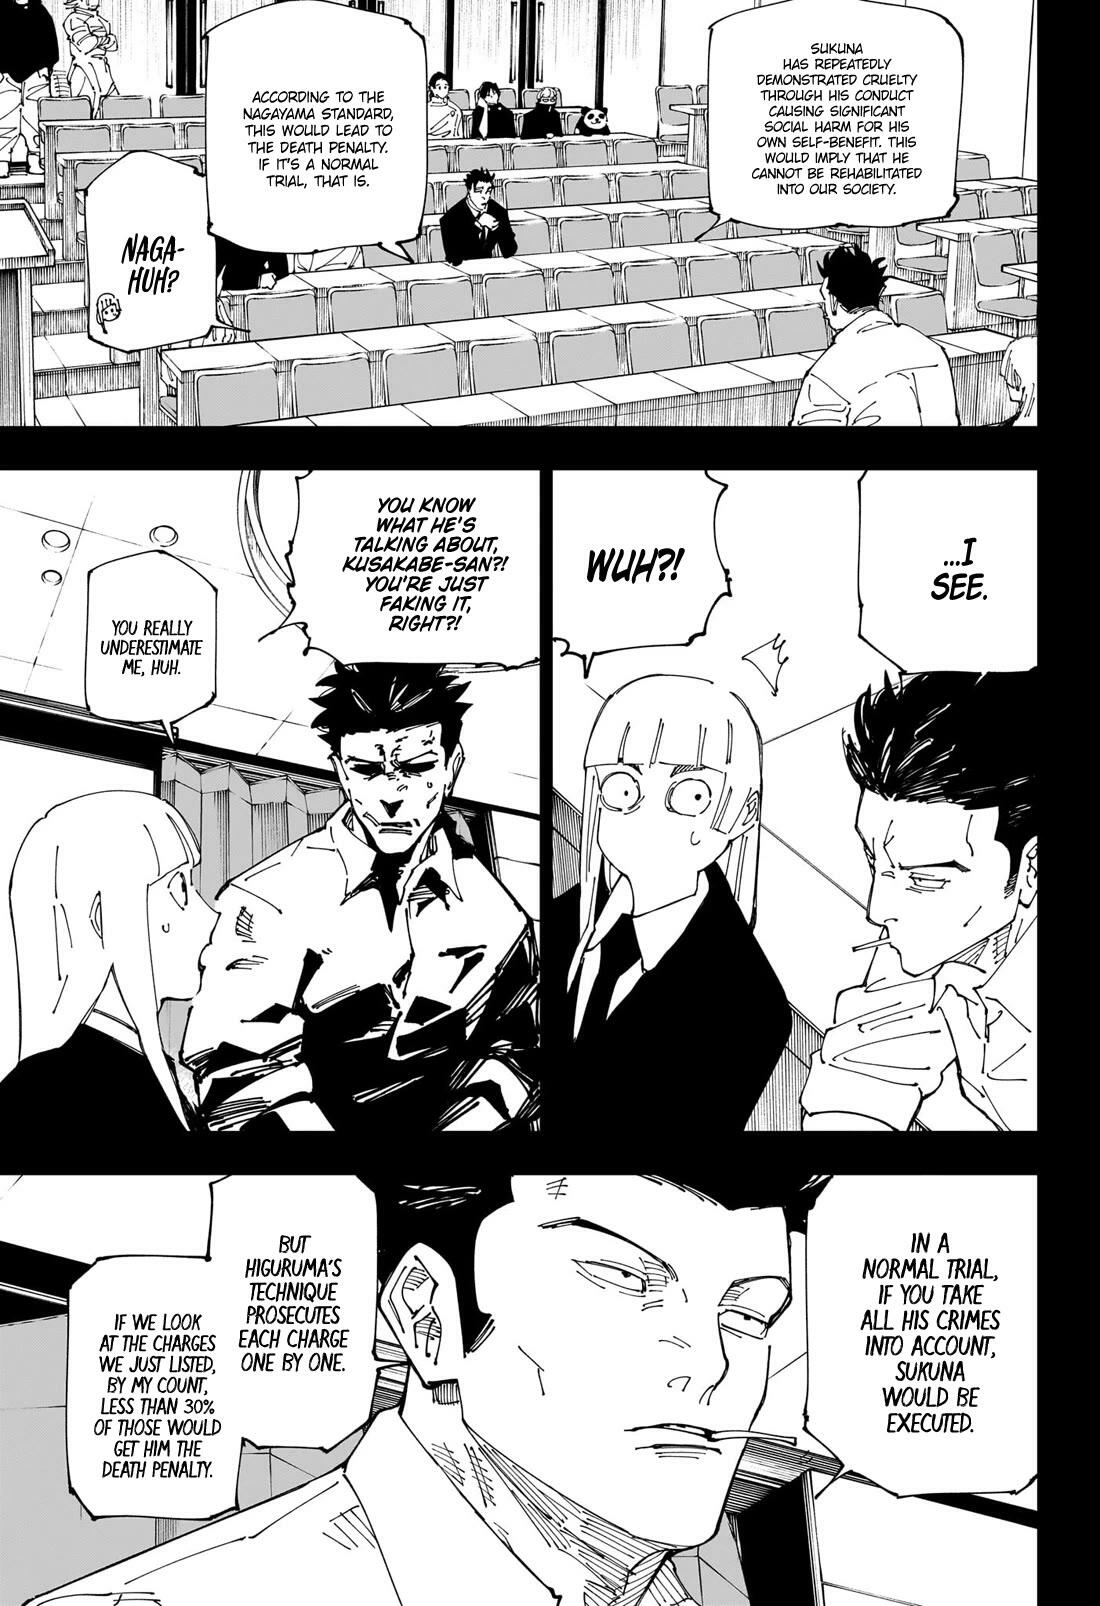 Jujutsu Kaisen Chapter 244: The Decisive Battle In The Uninhabited, Demon-Infested Shinjuku ⑯ page 8 - Mangakakalot